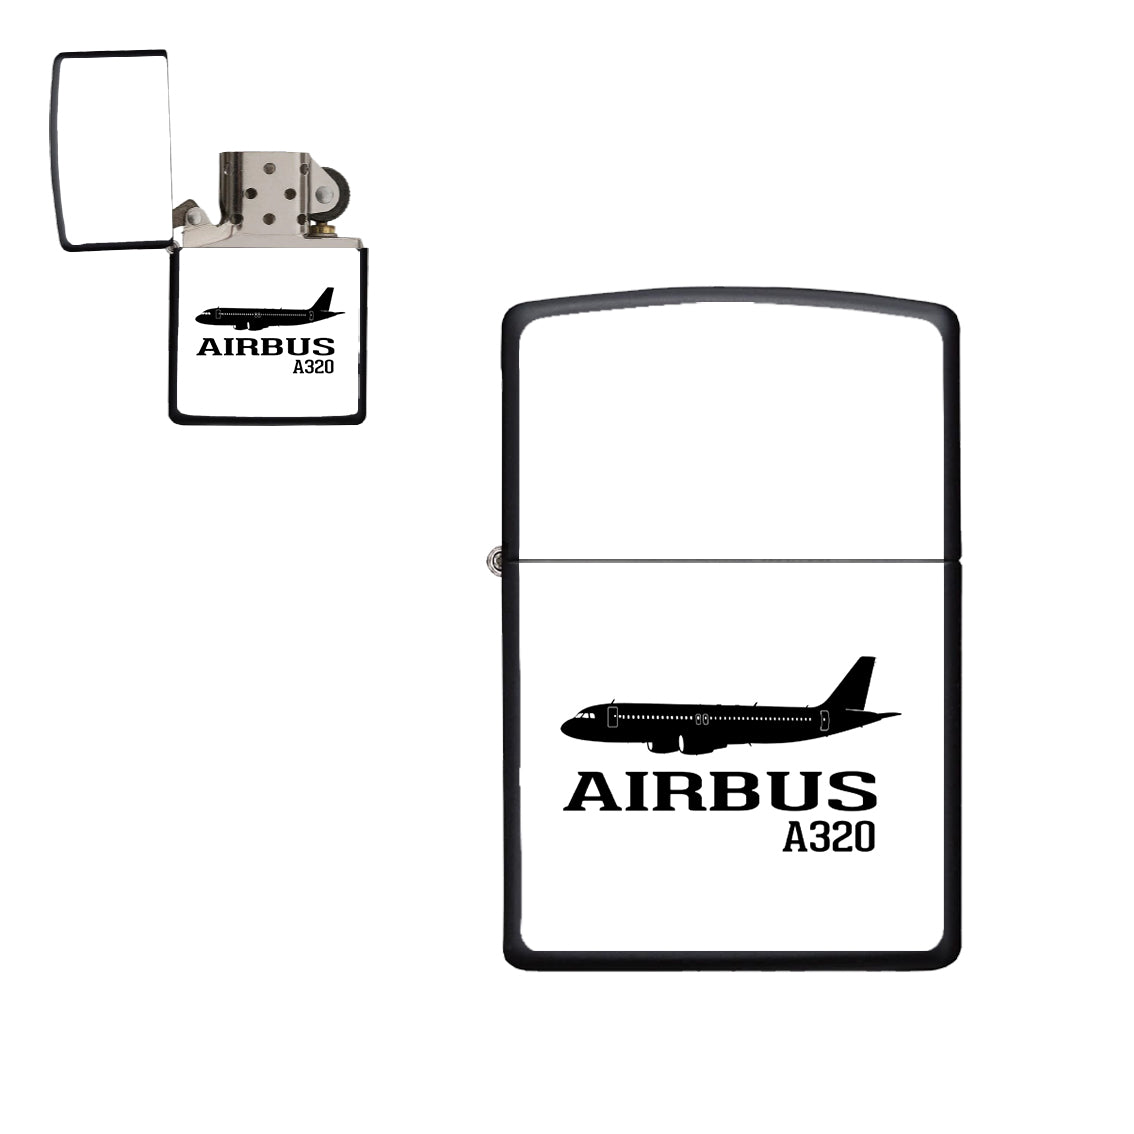 Airbus A320 Printed Designed Metal Lighters